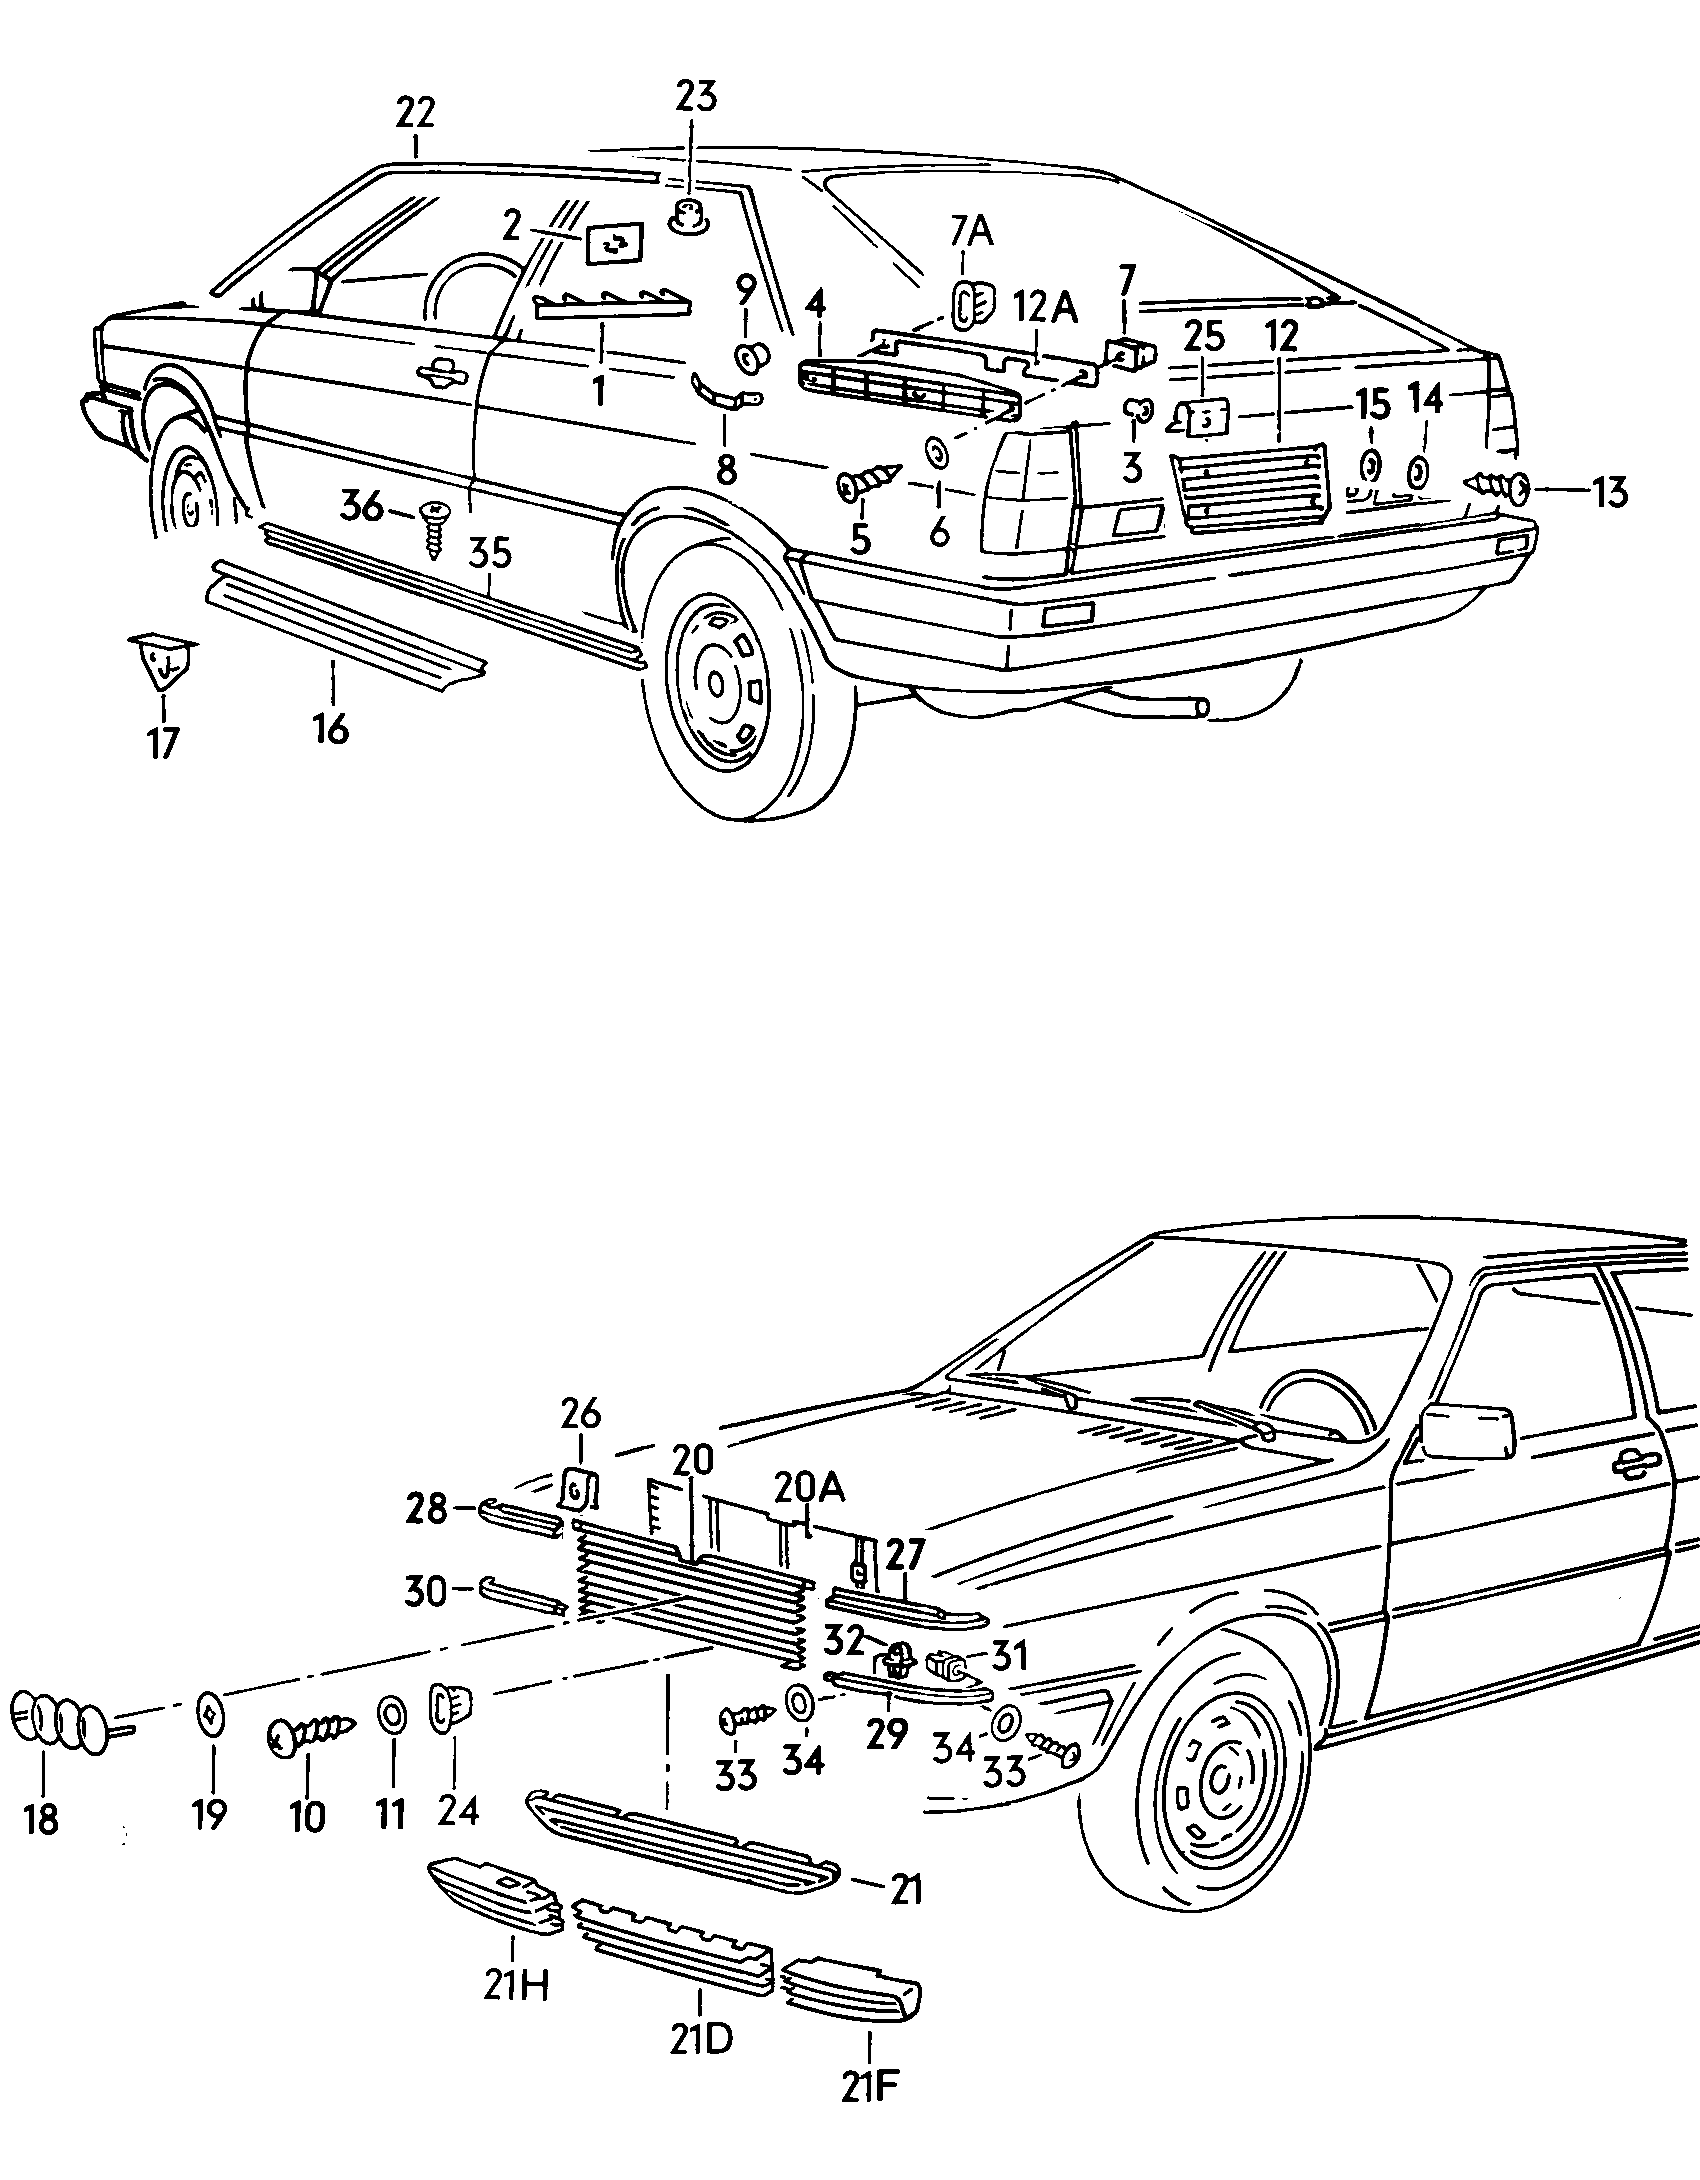 inscriptions/lettering rear - Audi Coupe - aco